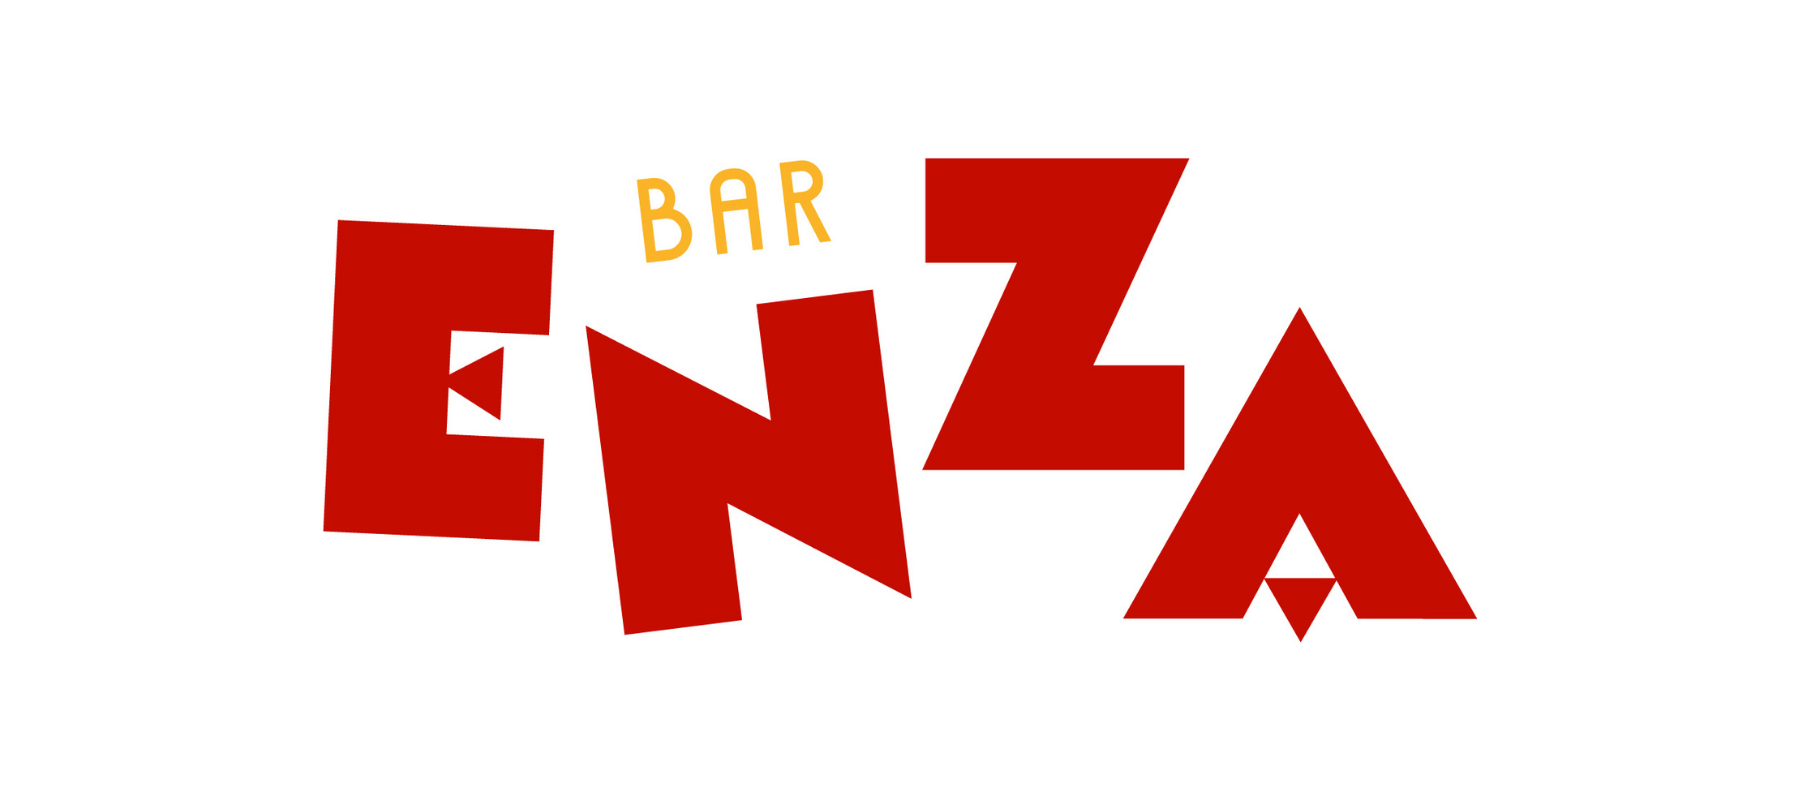 bar restaurant logo